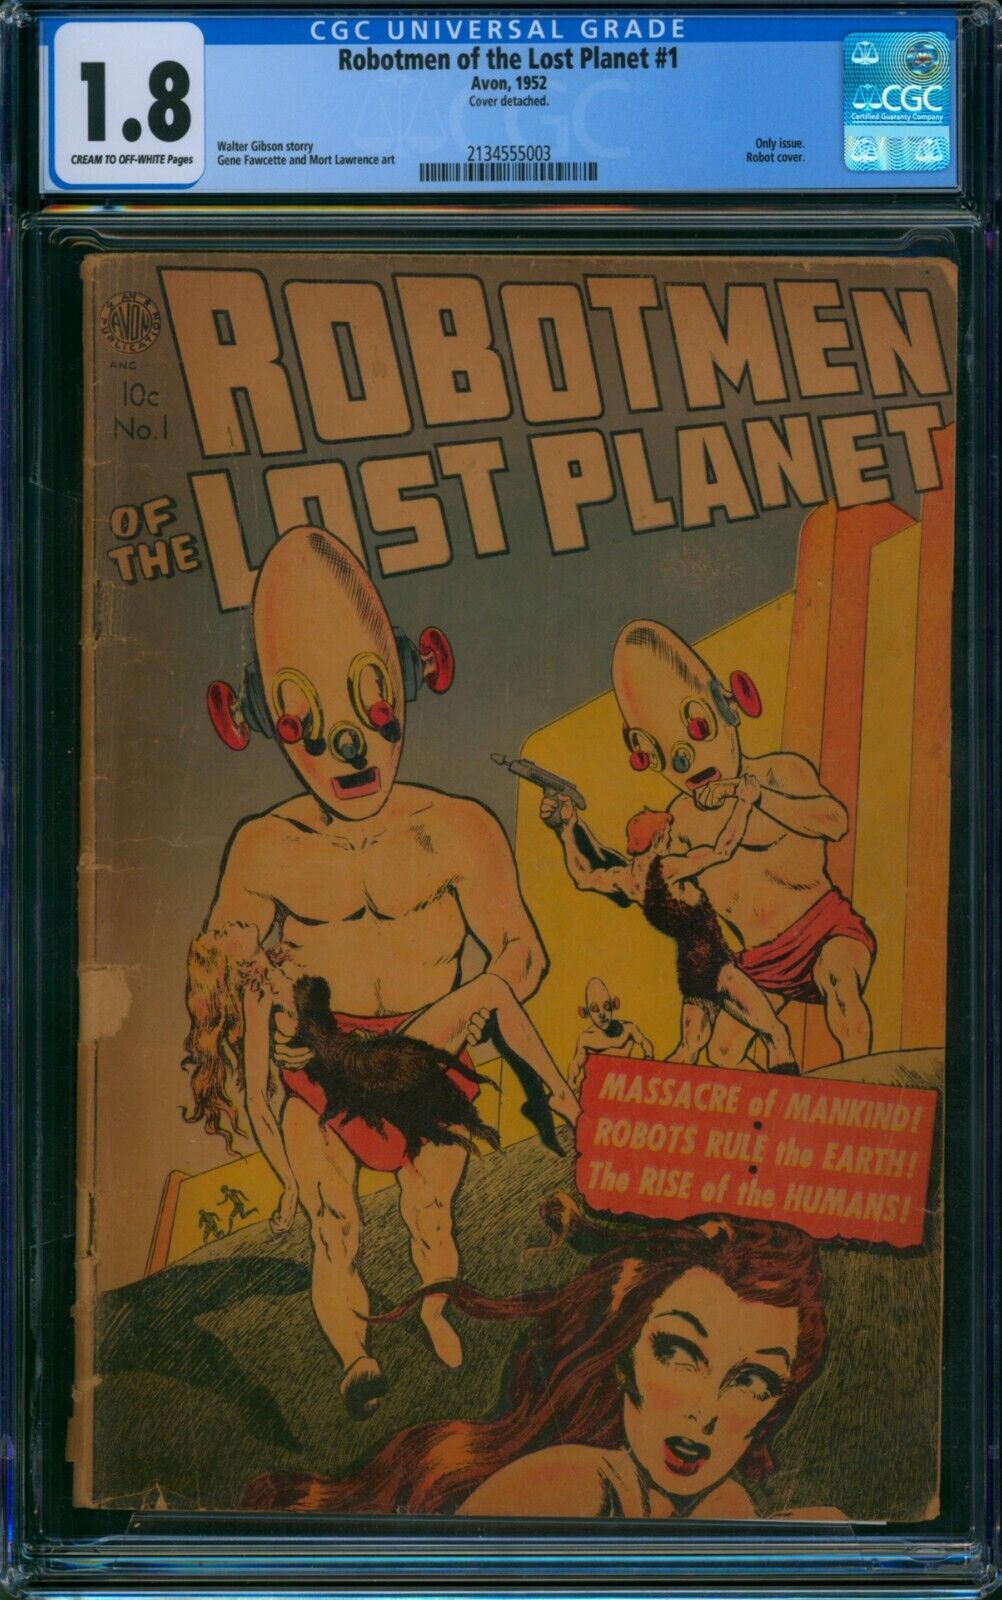 Robotmen of the Lost Planet #1 (1952) ⭐ CGC 1.8 ⭐ Golden Age Sci-Fi Avon Comic